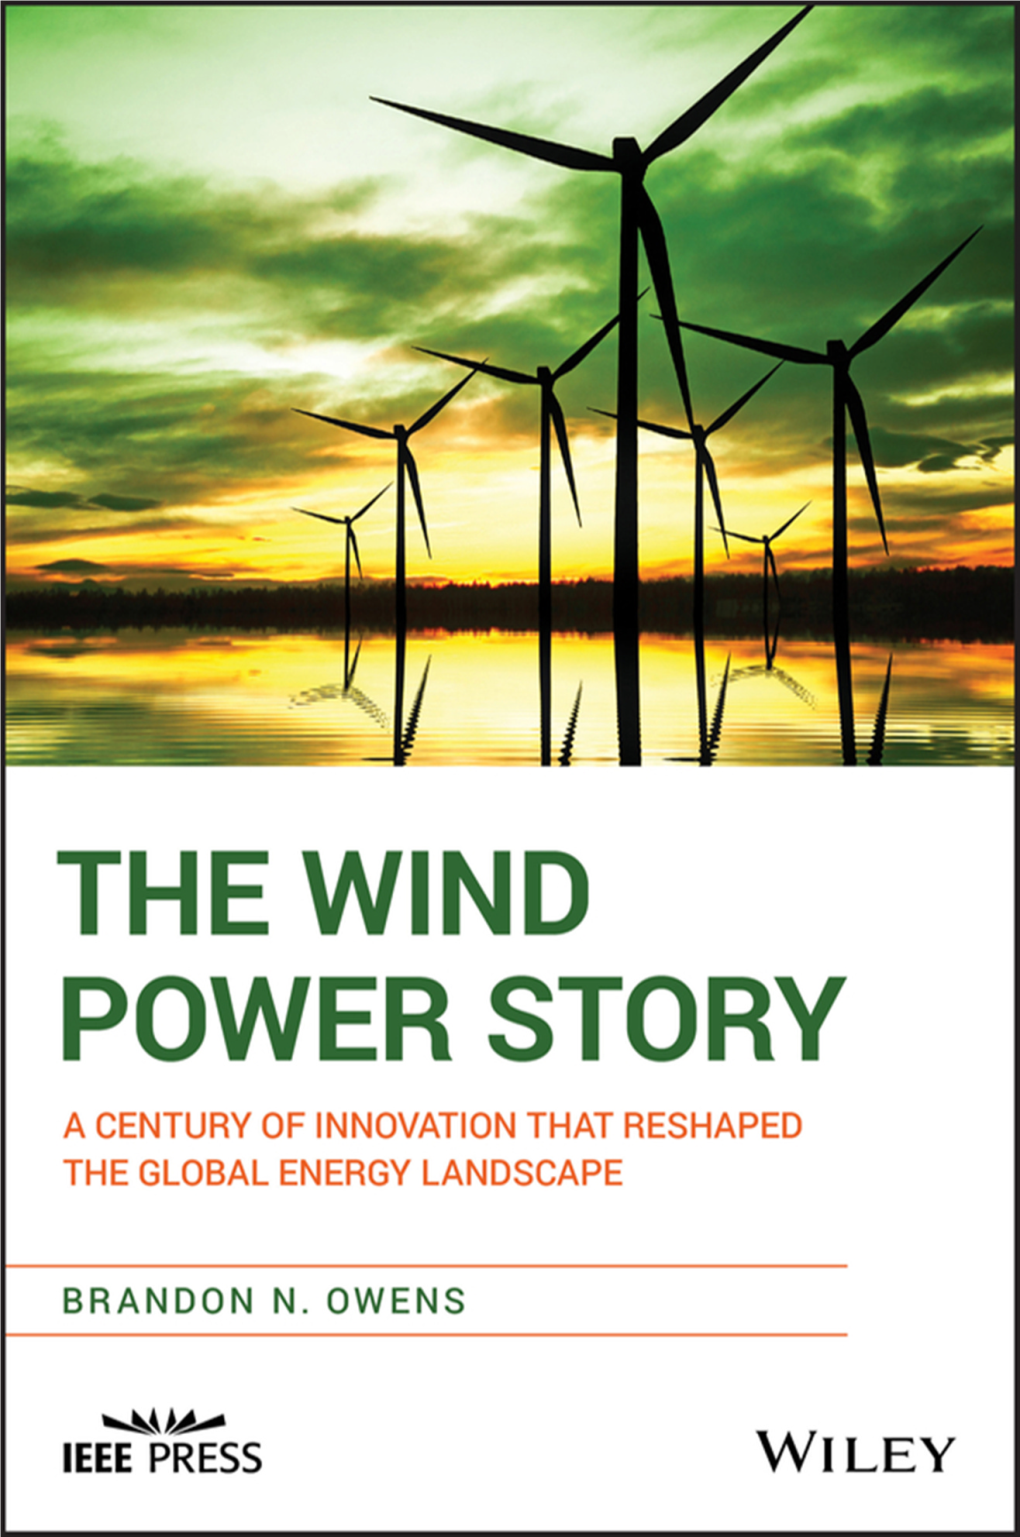 The Wind Power Story IEEE Press 445 Hoes Lane Piscataway, NJ 08854